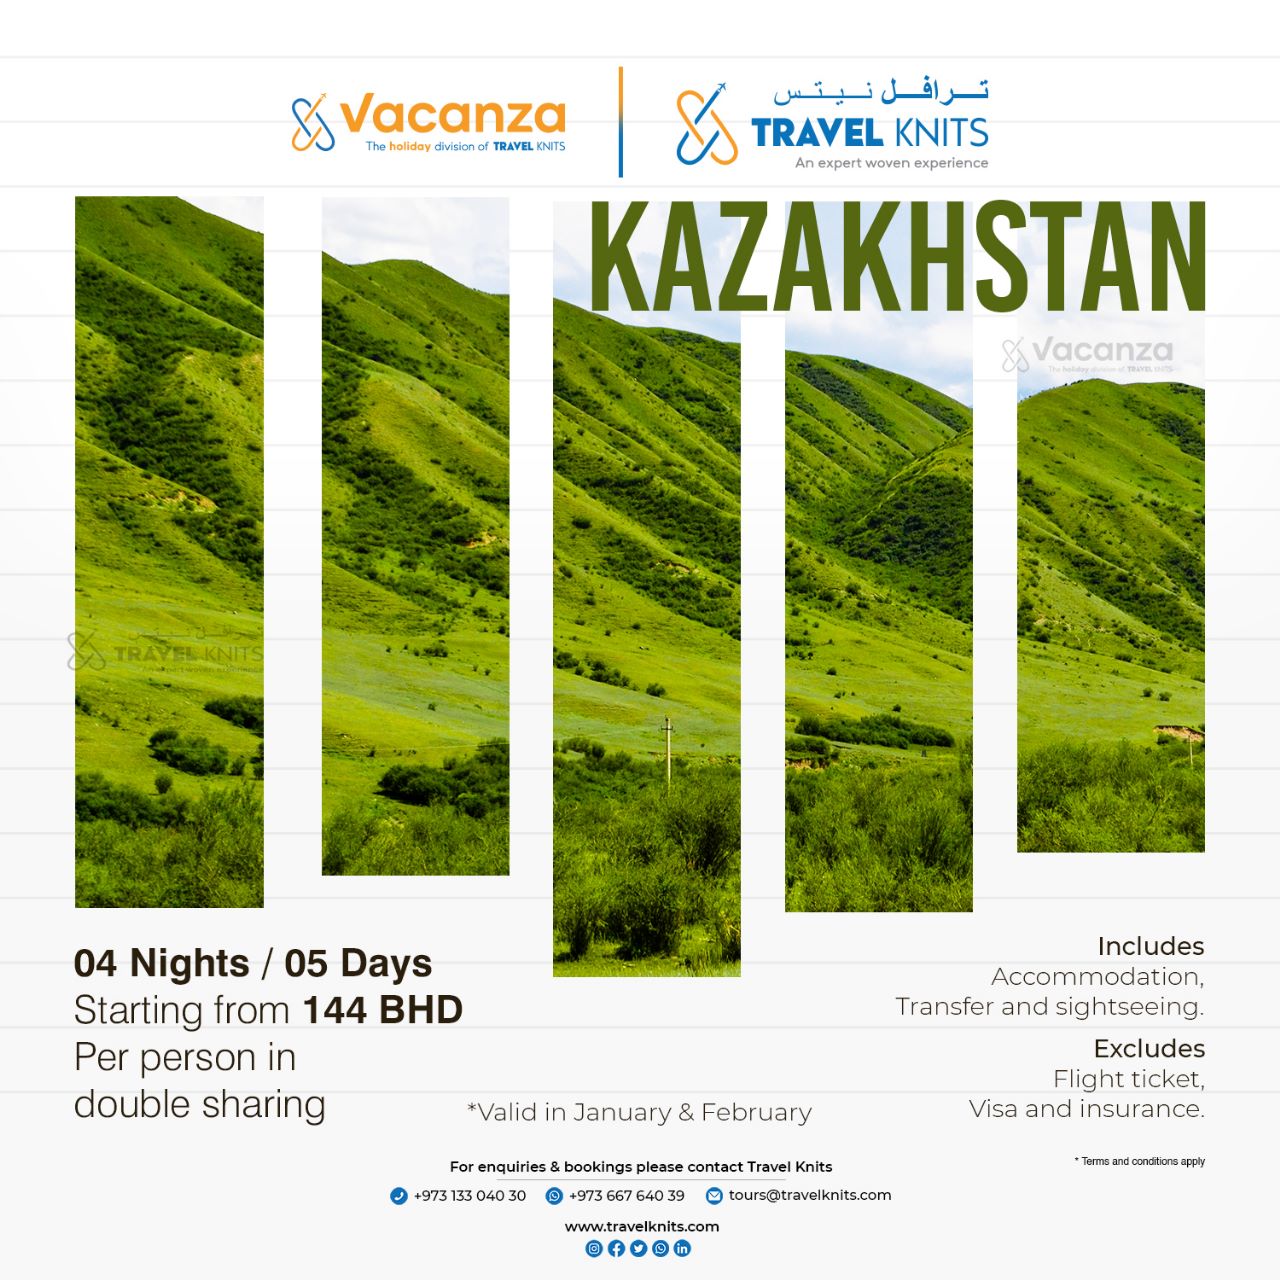 Kazakhstan|KazakhstanTour Packages - Book honeymoon ,family,adventure tour packages to Kazakhstan|Travel Knits												